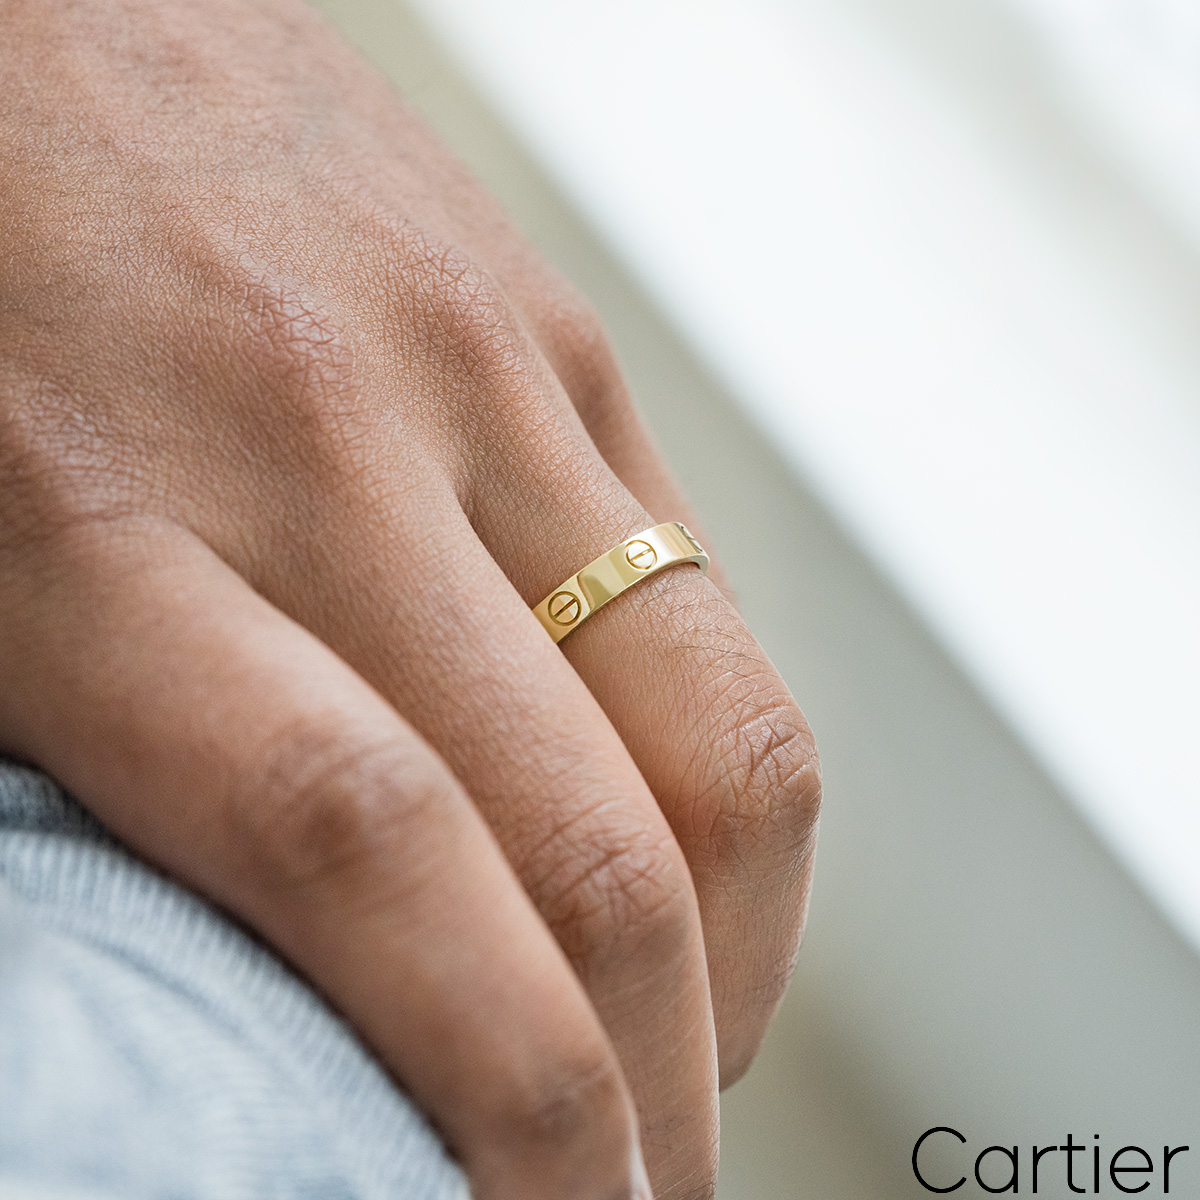 Cartier ring | Ring verlobung, Verlobungsring, Ehering verlobungsring